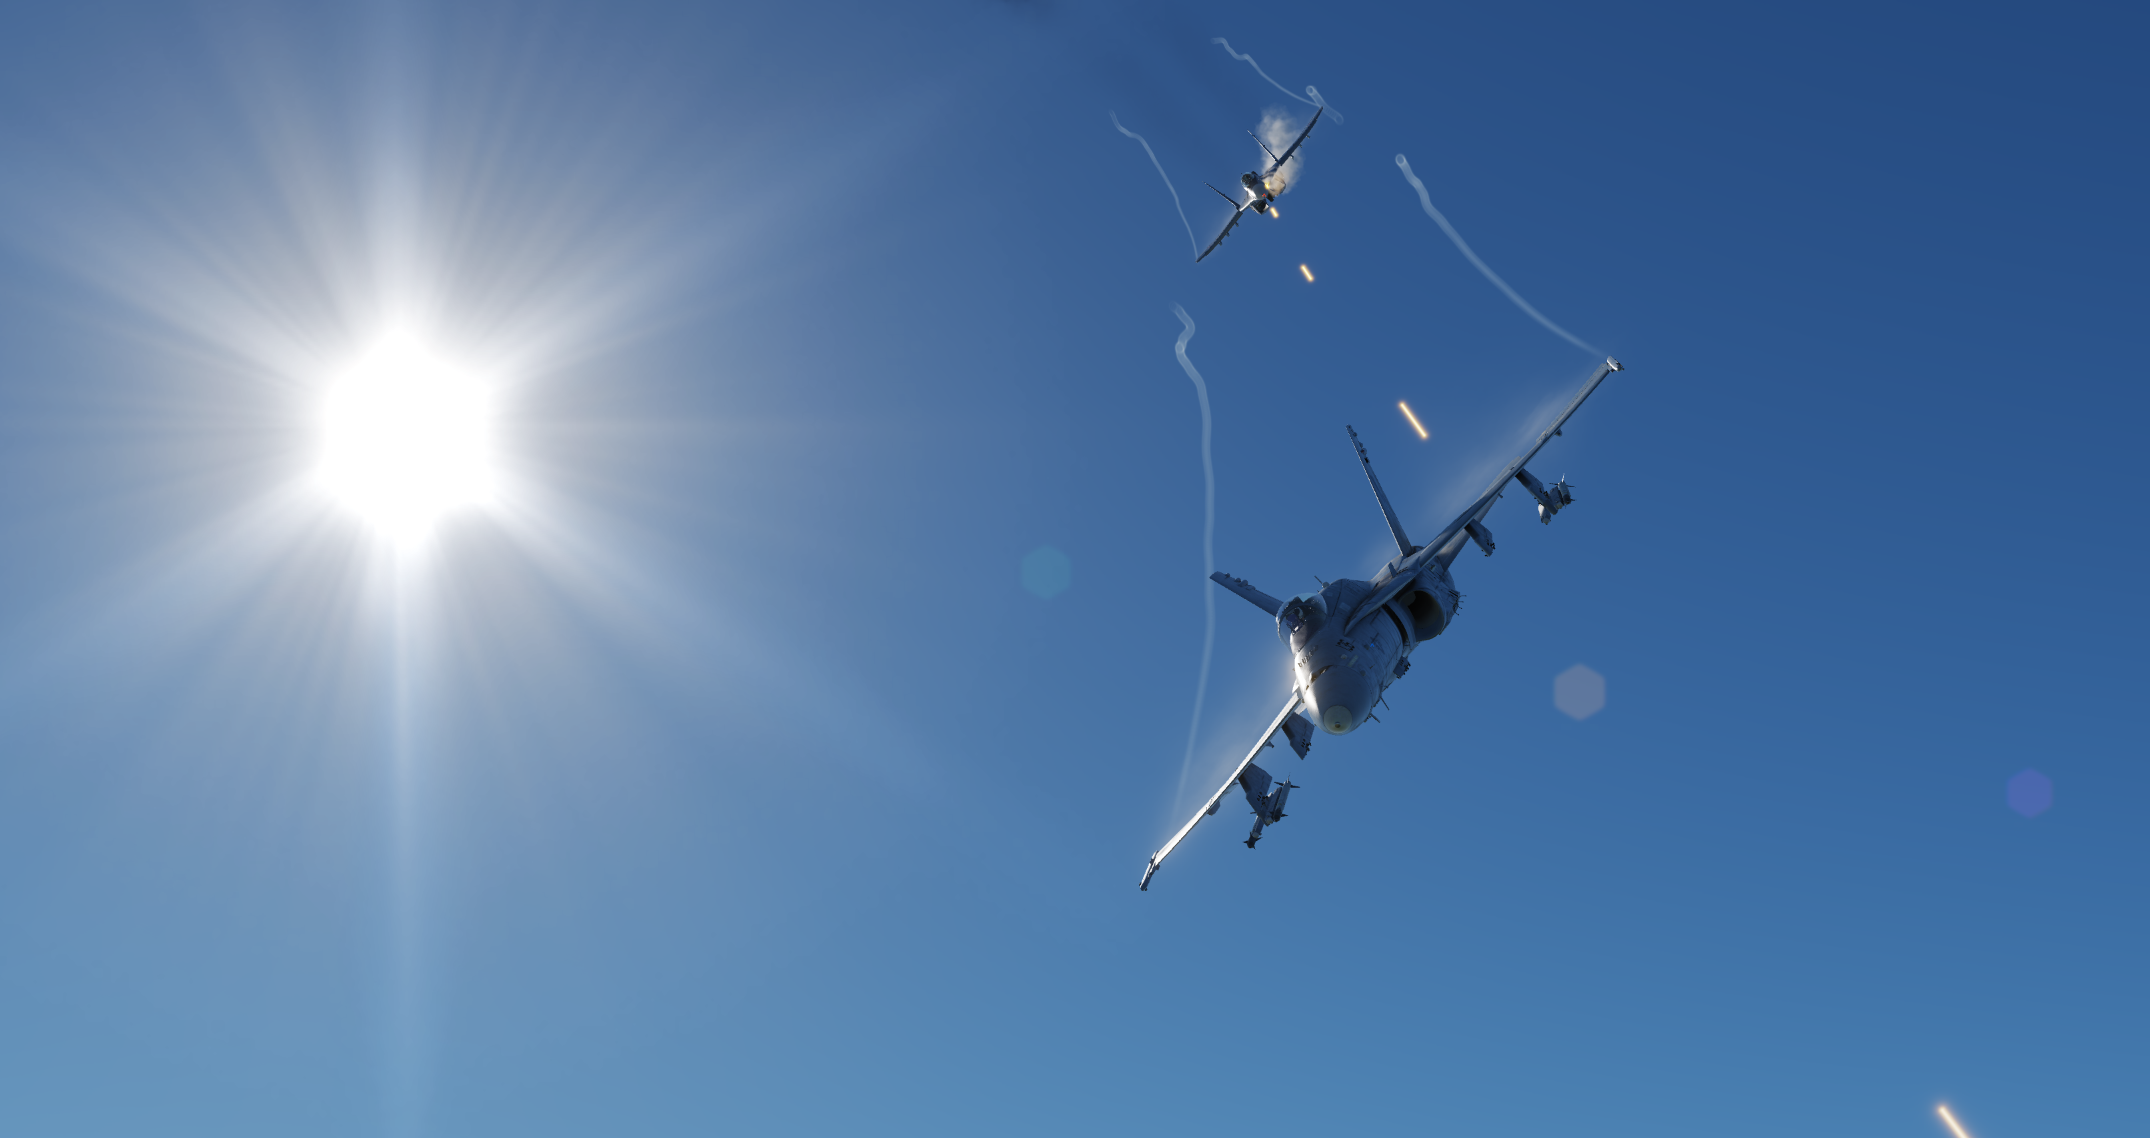 AKA Wardog Air Combat Maneuvering Training Mission UPDATED ver 2-00 